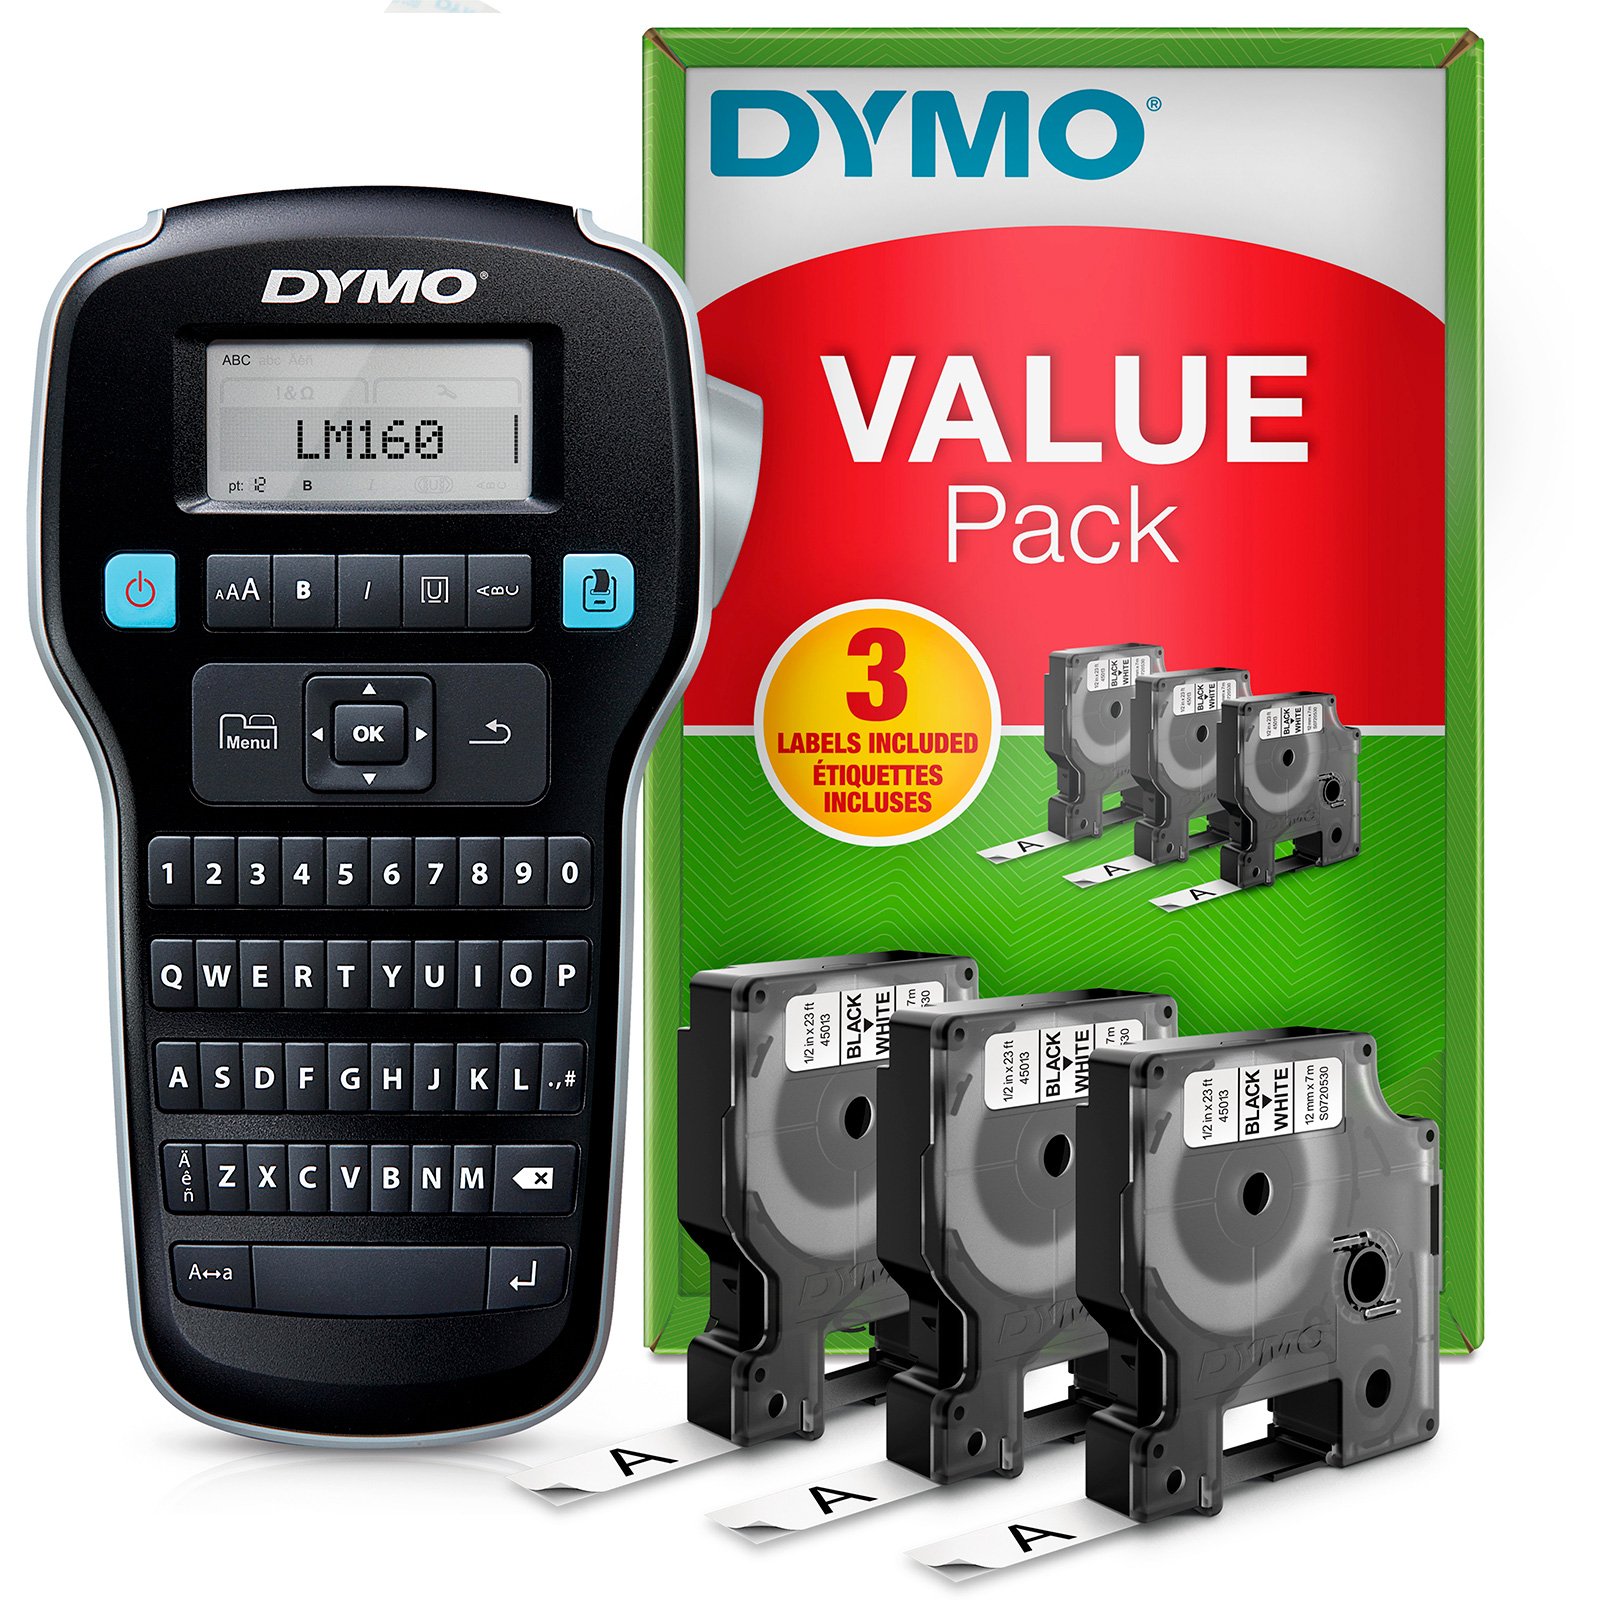 Dymo Labelmanager LM160 labelprinter + 3 rl tape